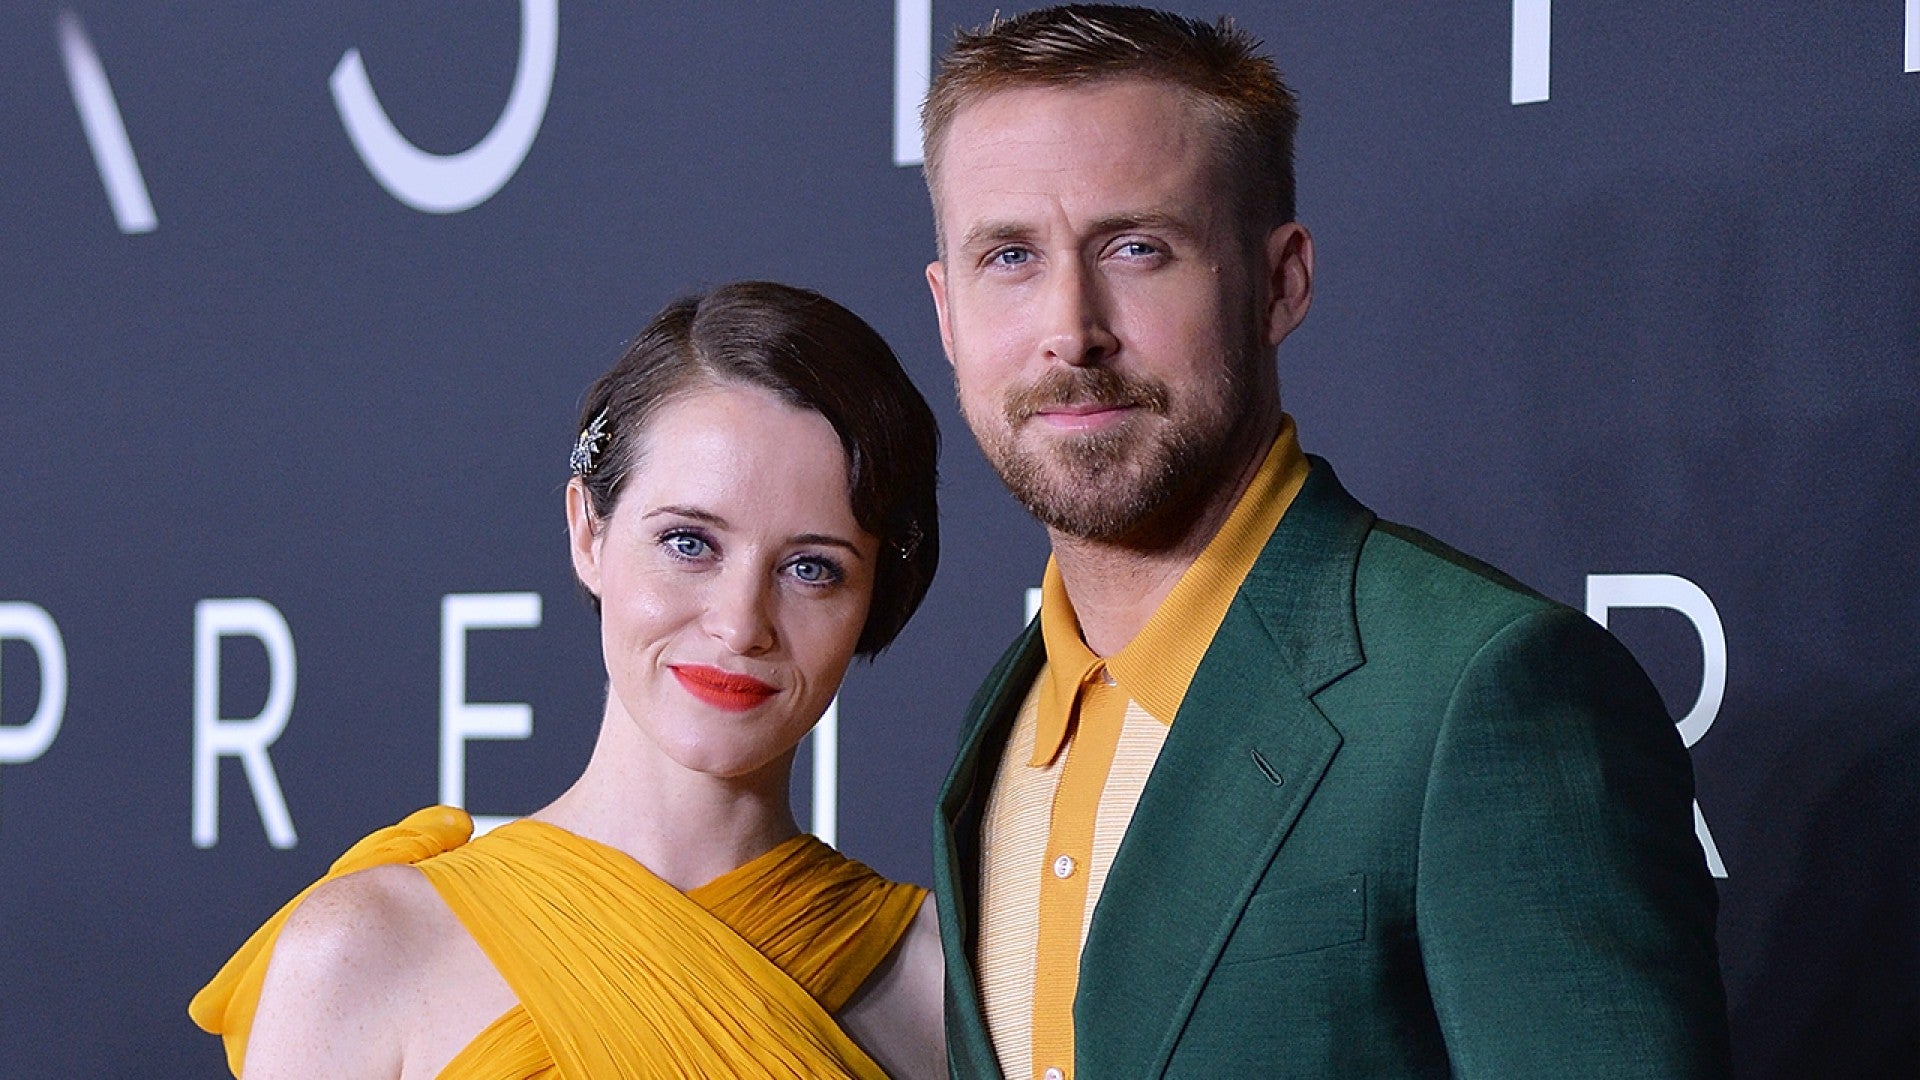 13 Best Ryan Gosling Gifts for 2018 - Unique Ryan Gosling